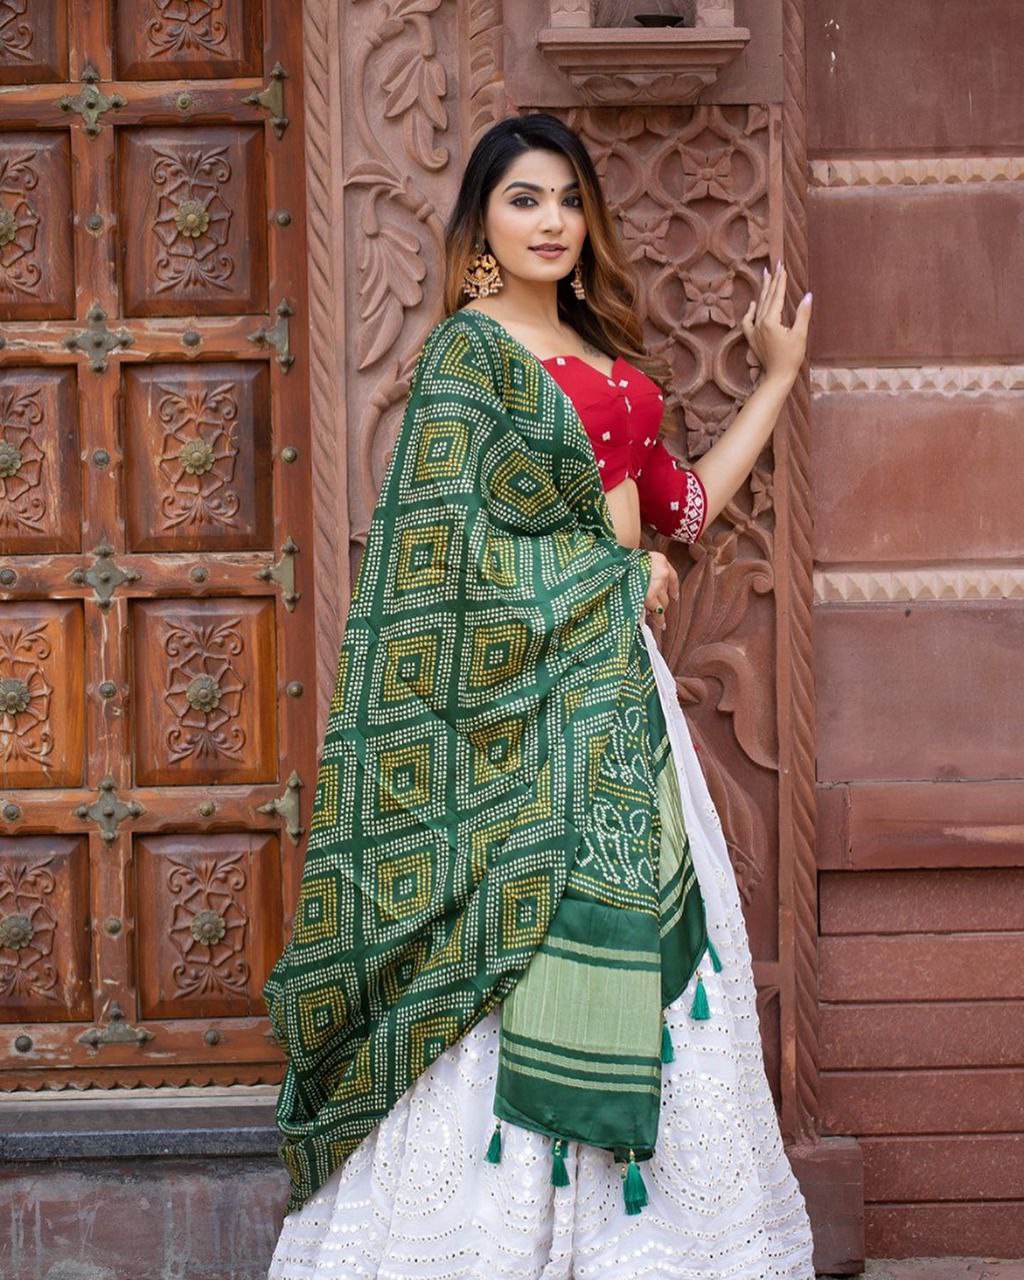 Green Lacha Kameez Silk Lehenga Choli Indian Party Wear Lengha Chunni Dress  Top | eBay